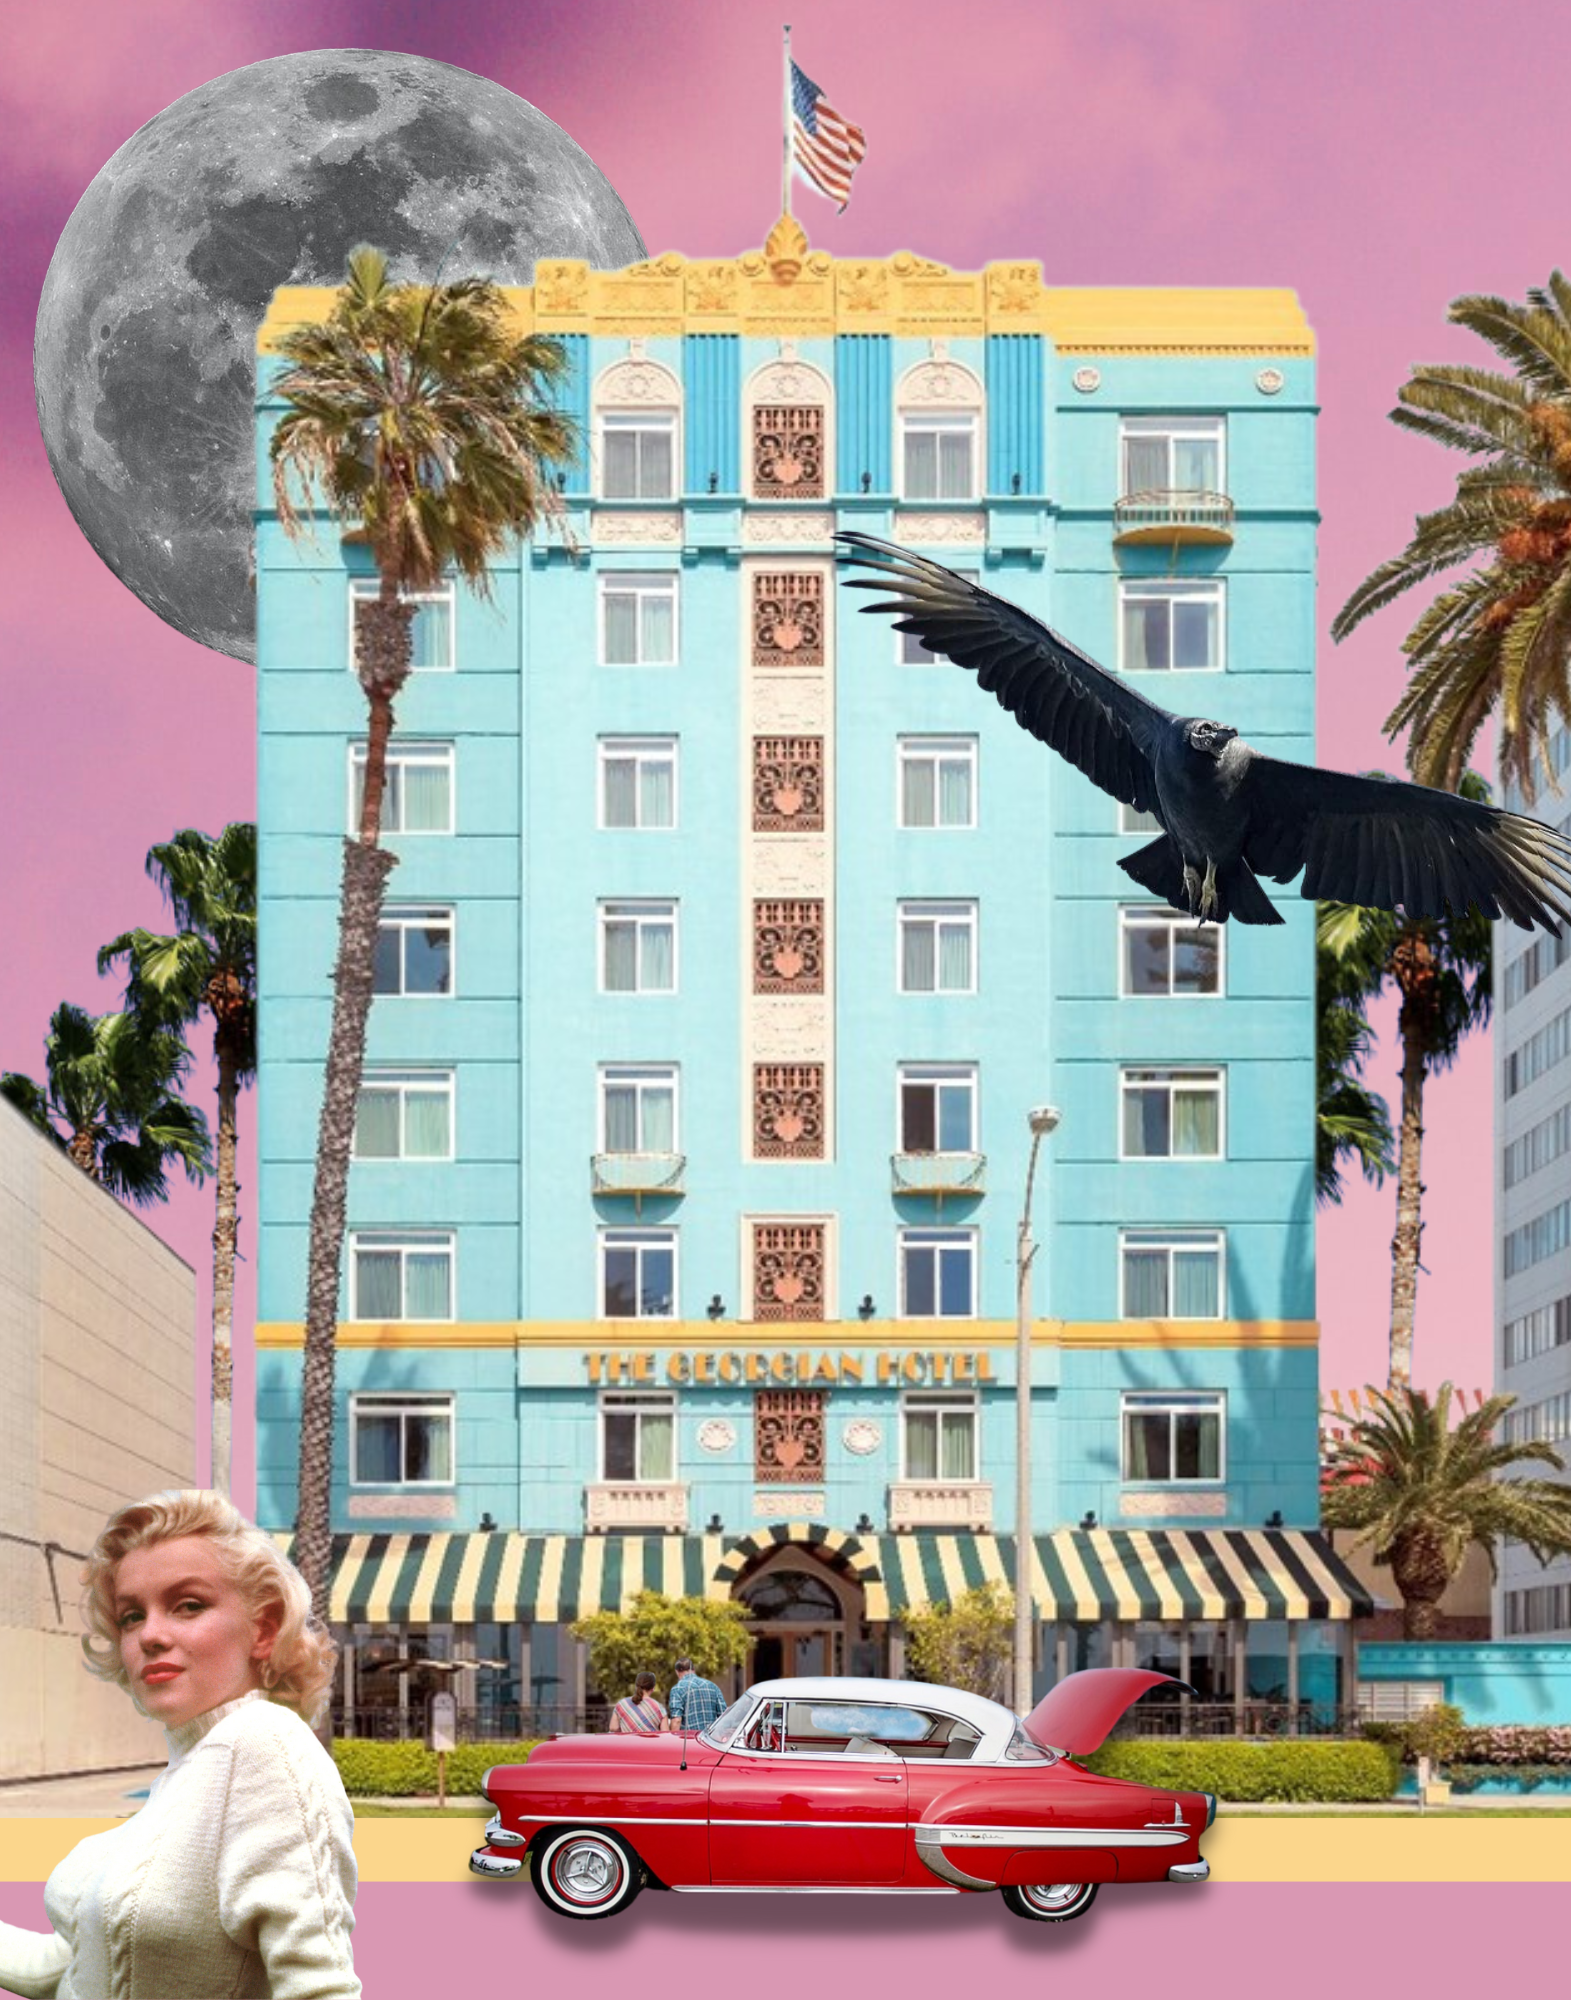 The Georgian Hotel by Miranda Van Young